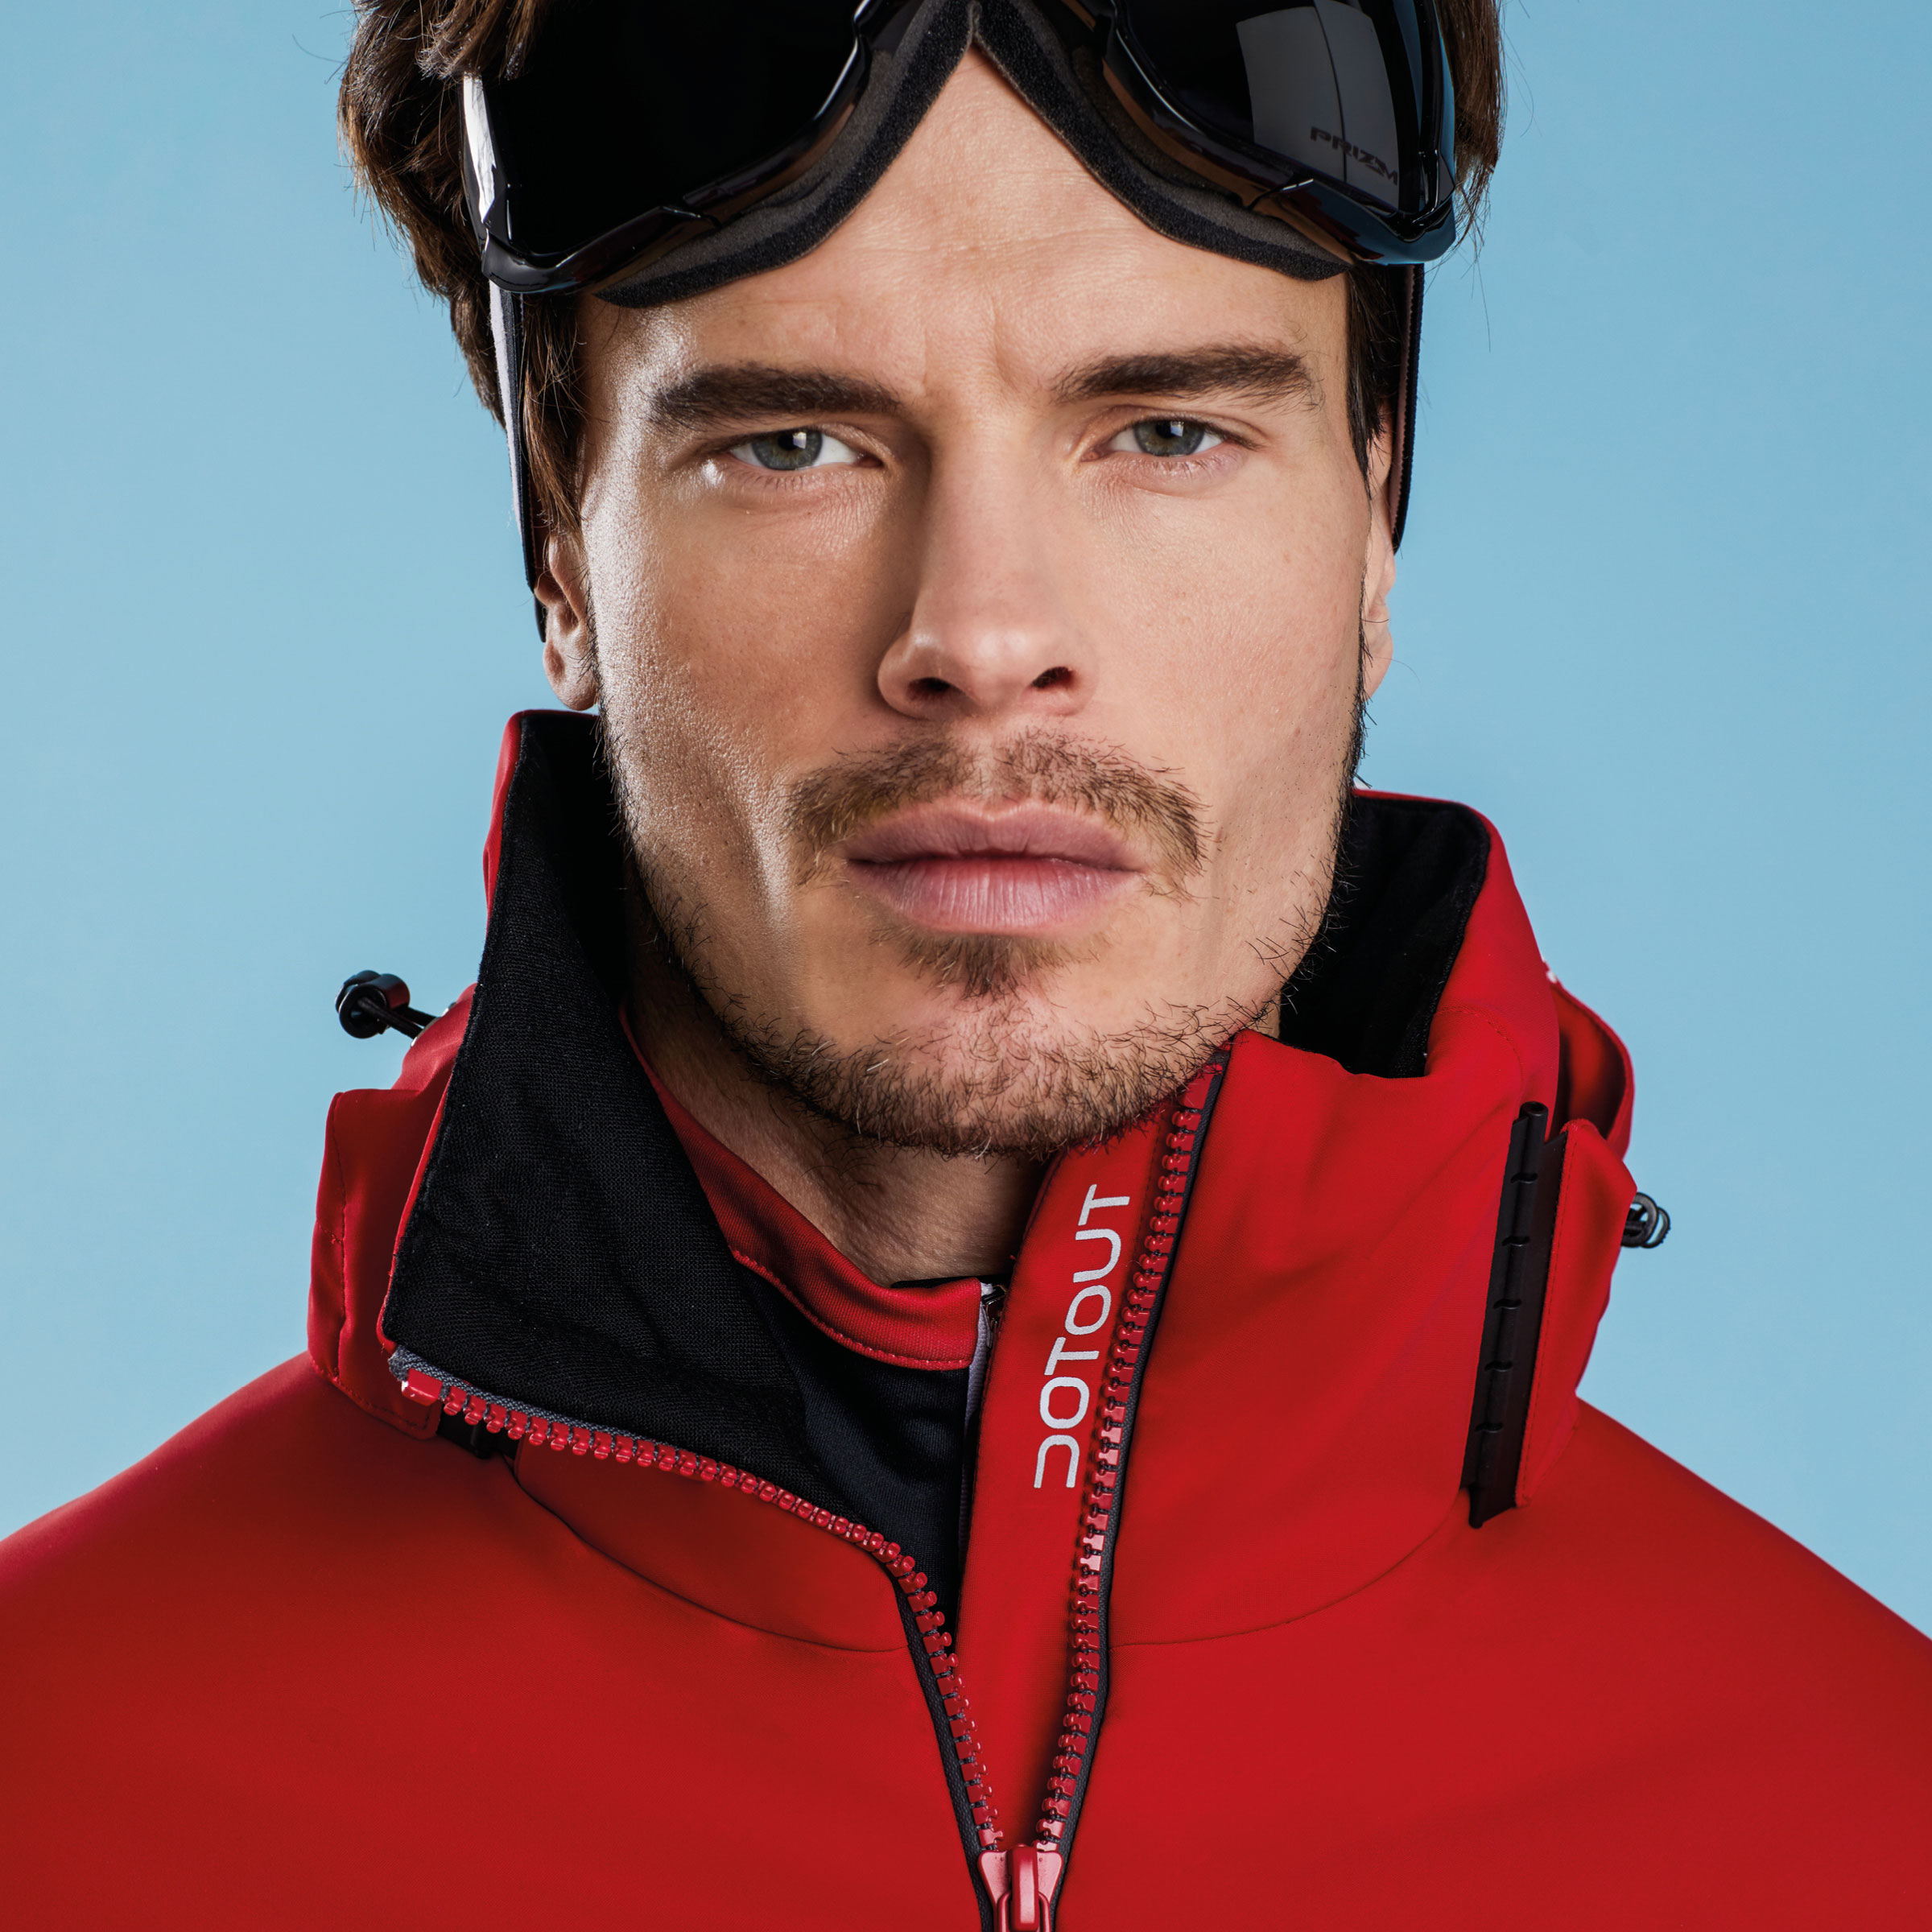  Ski & Snow Jackets -  dotout Power Jacket